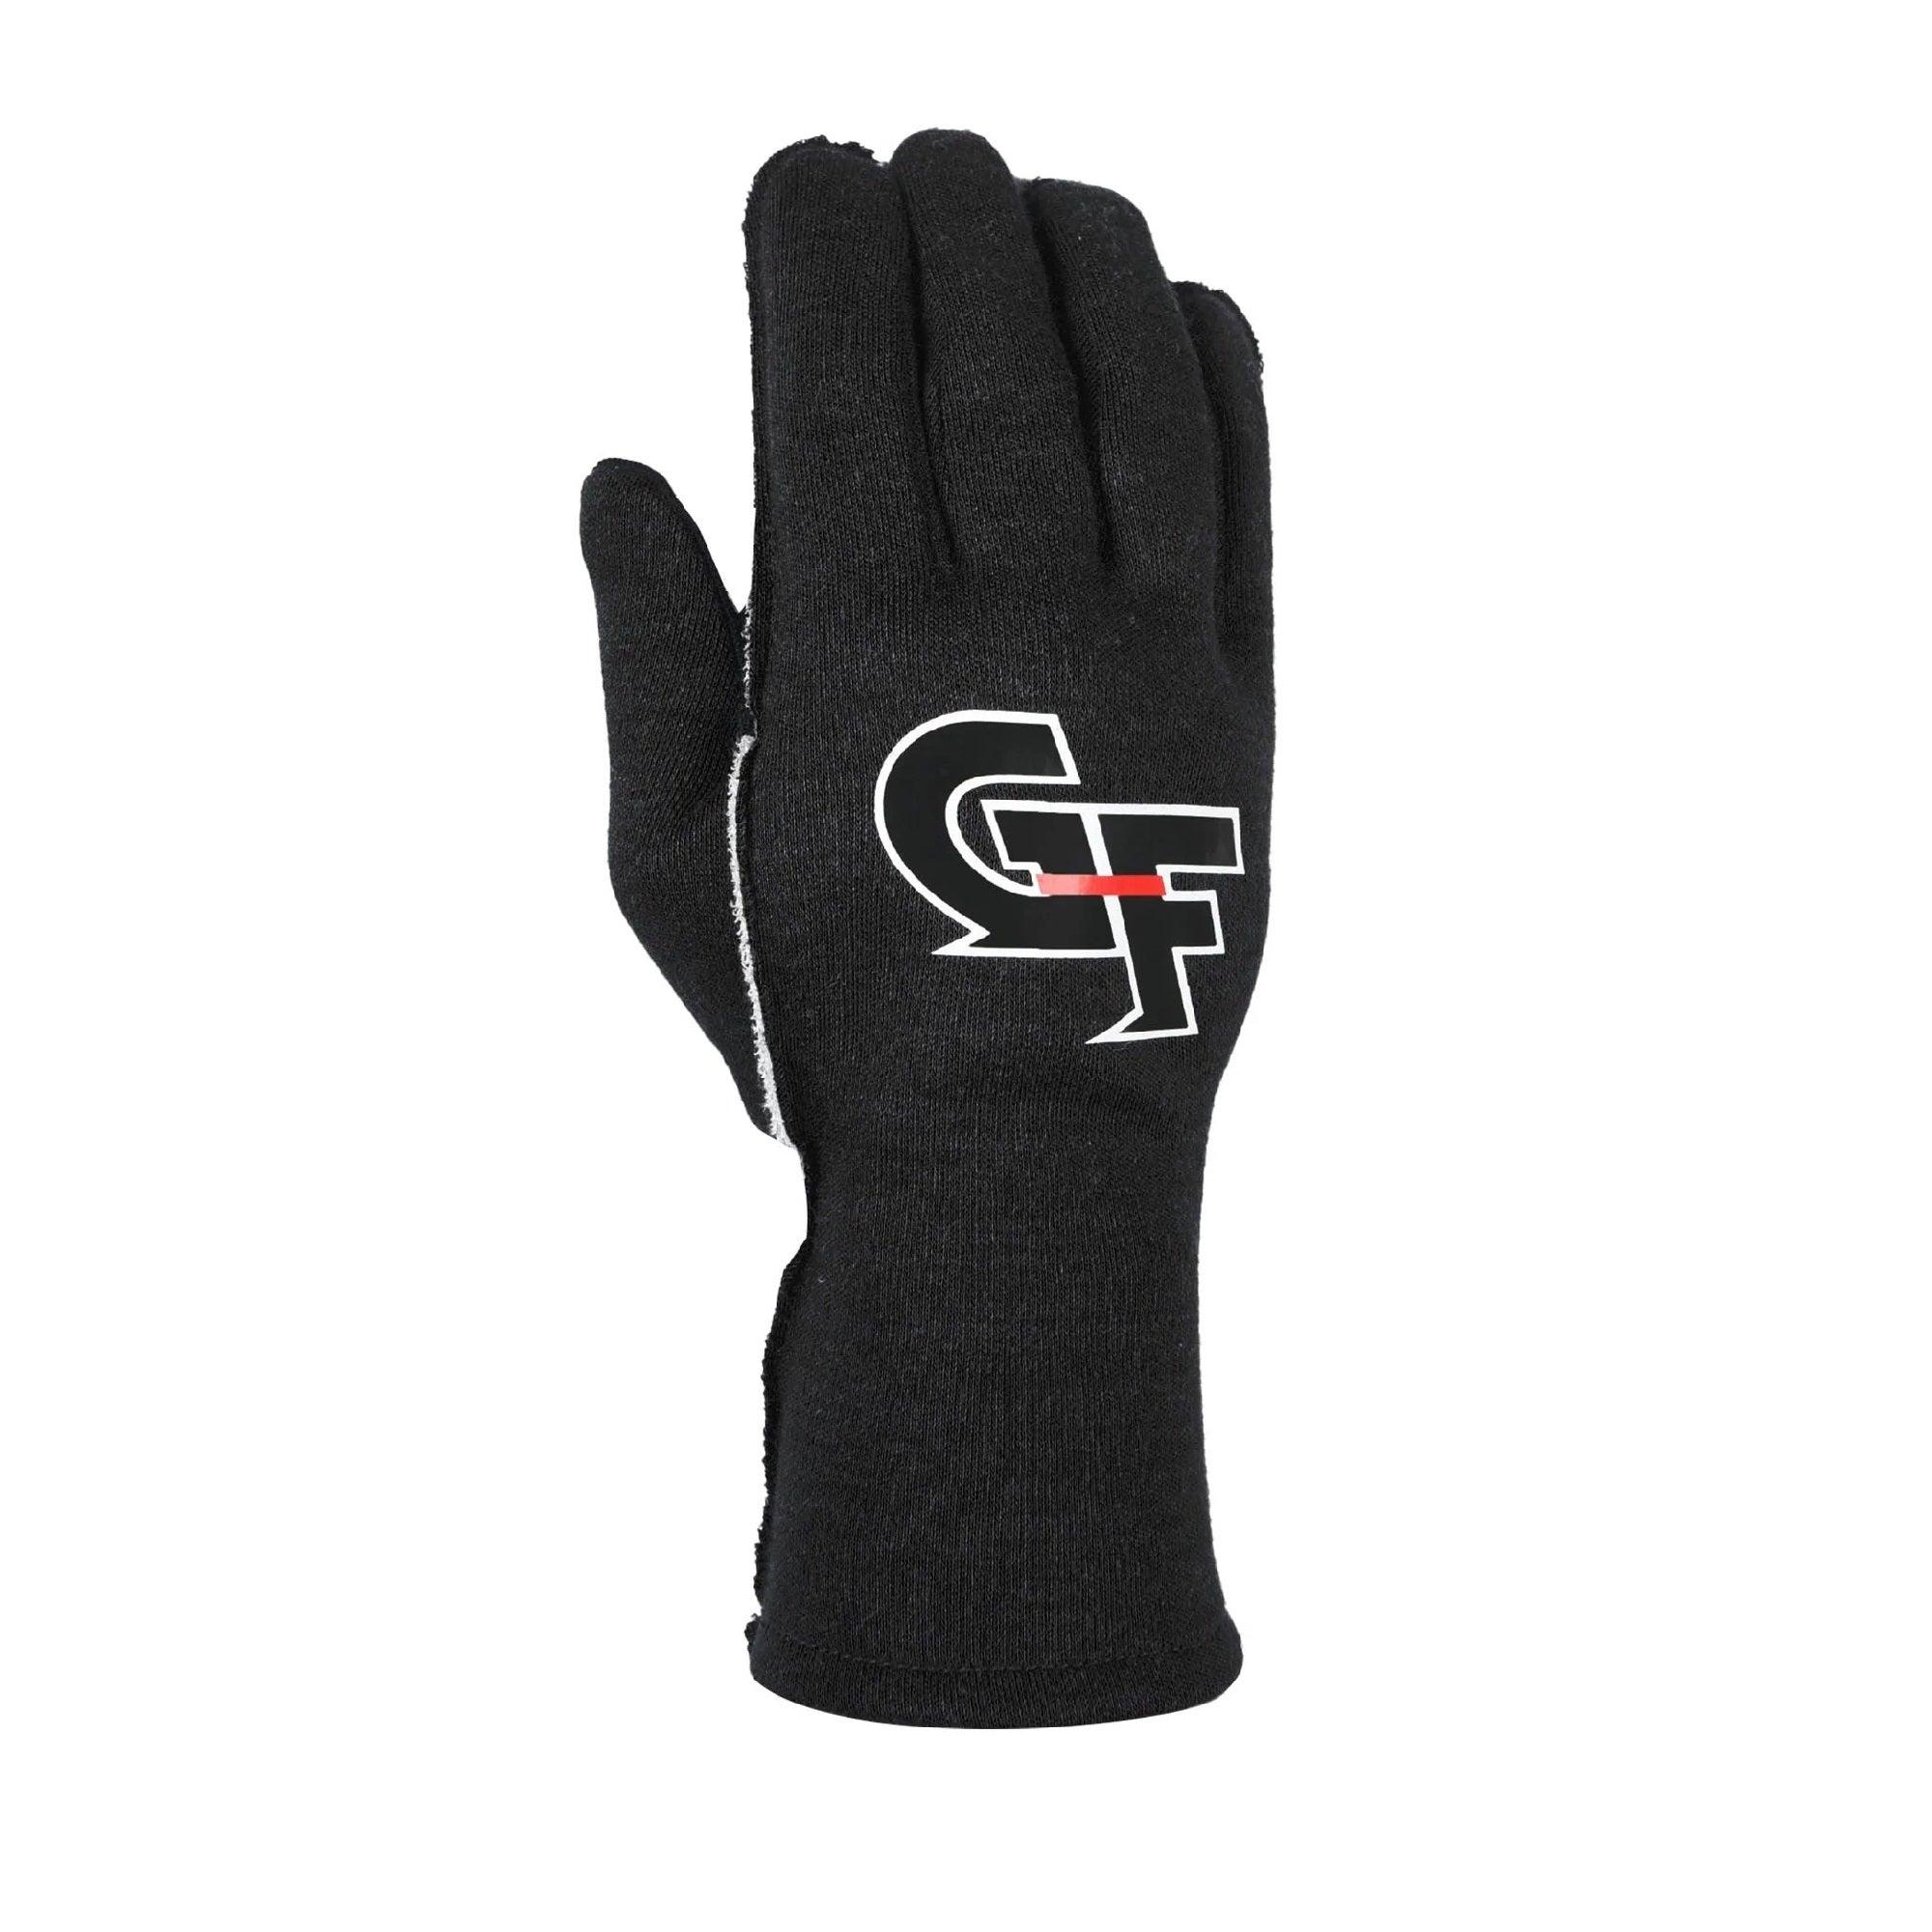 Gloves G-Limit X-Large Black - Burlile Performance Products